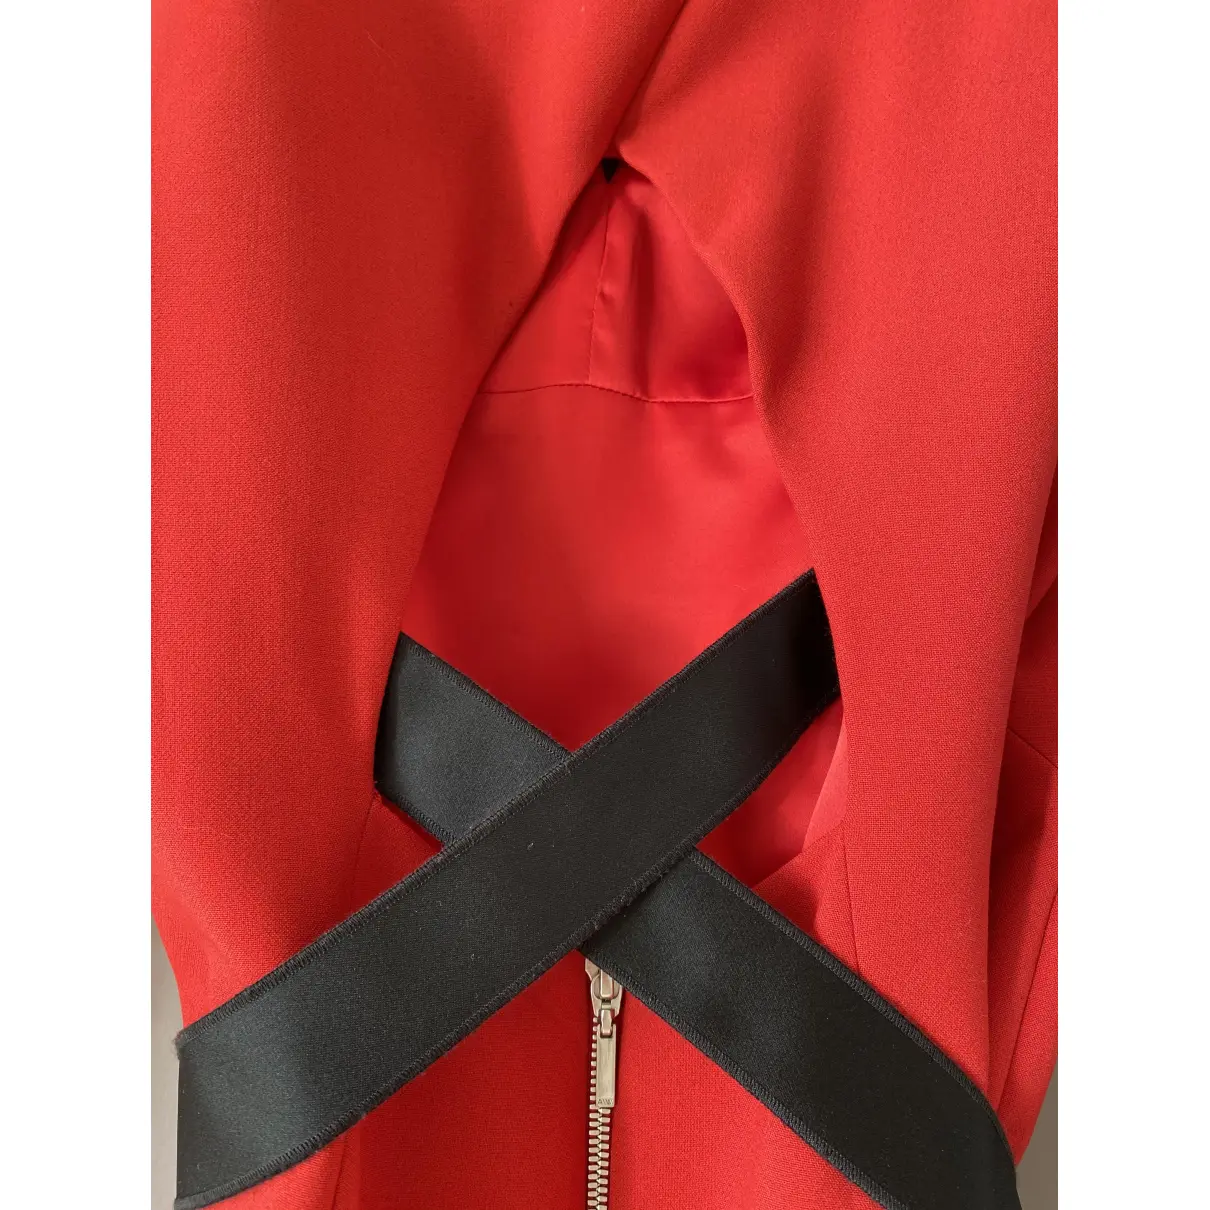 Buy Amanda Wakeley Mid-length dress online